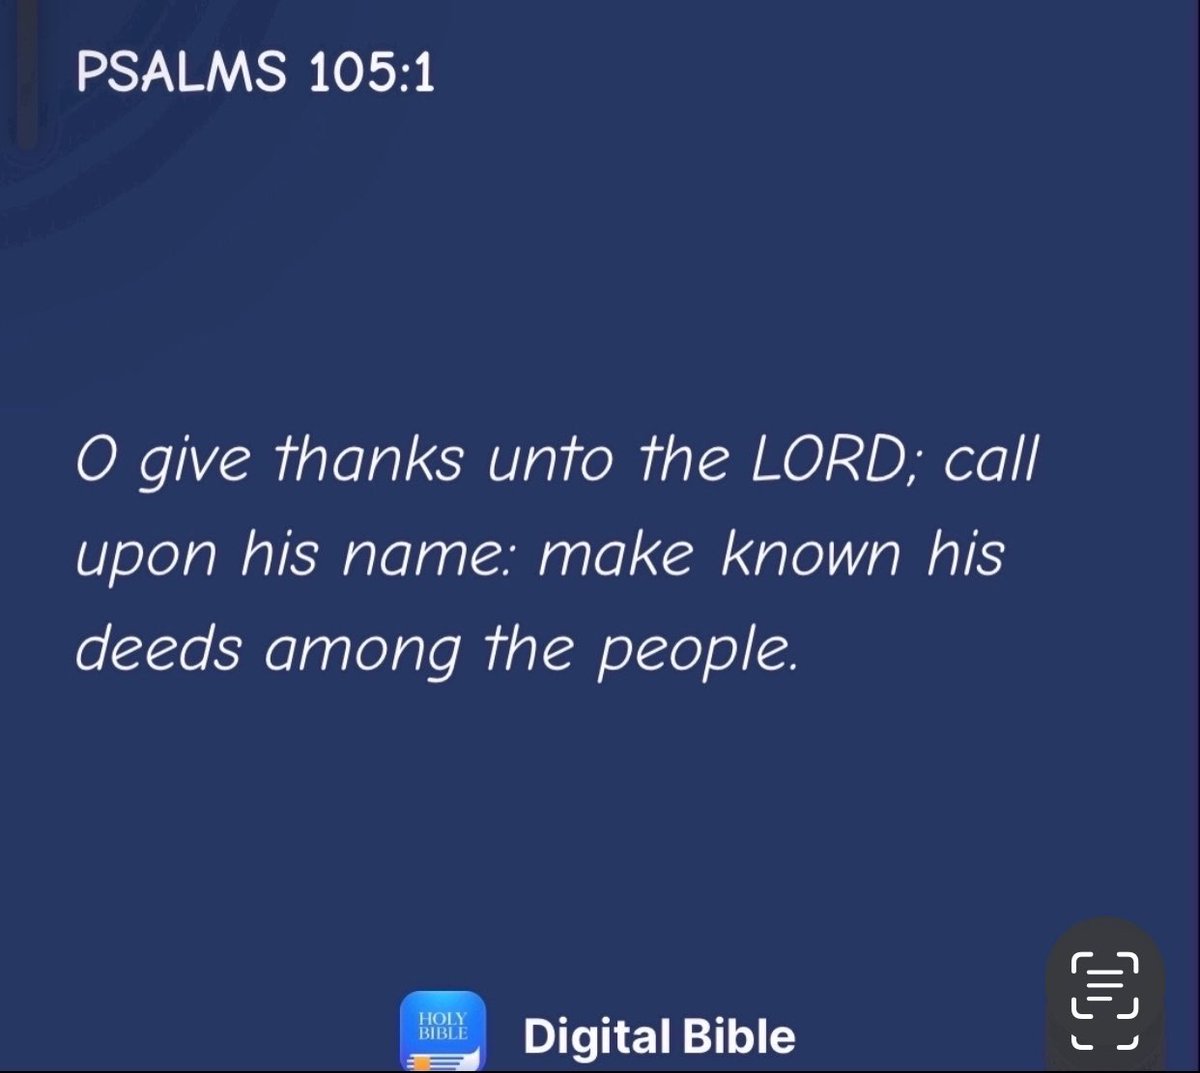 Psalms 105:1
'O give thanks unto the LORD: call upon his name: make known his deedsamong the people.'

#BlessedAndThankful
#MCGICares